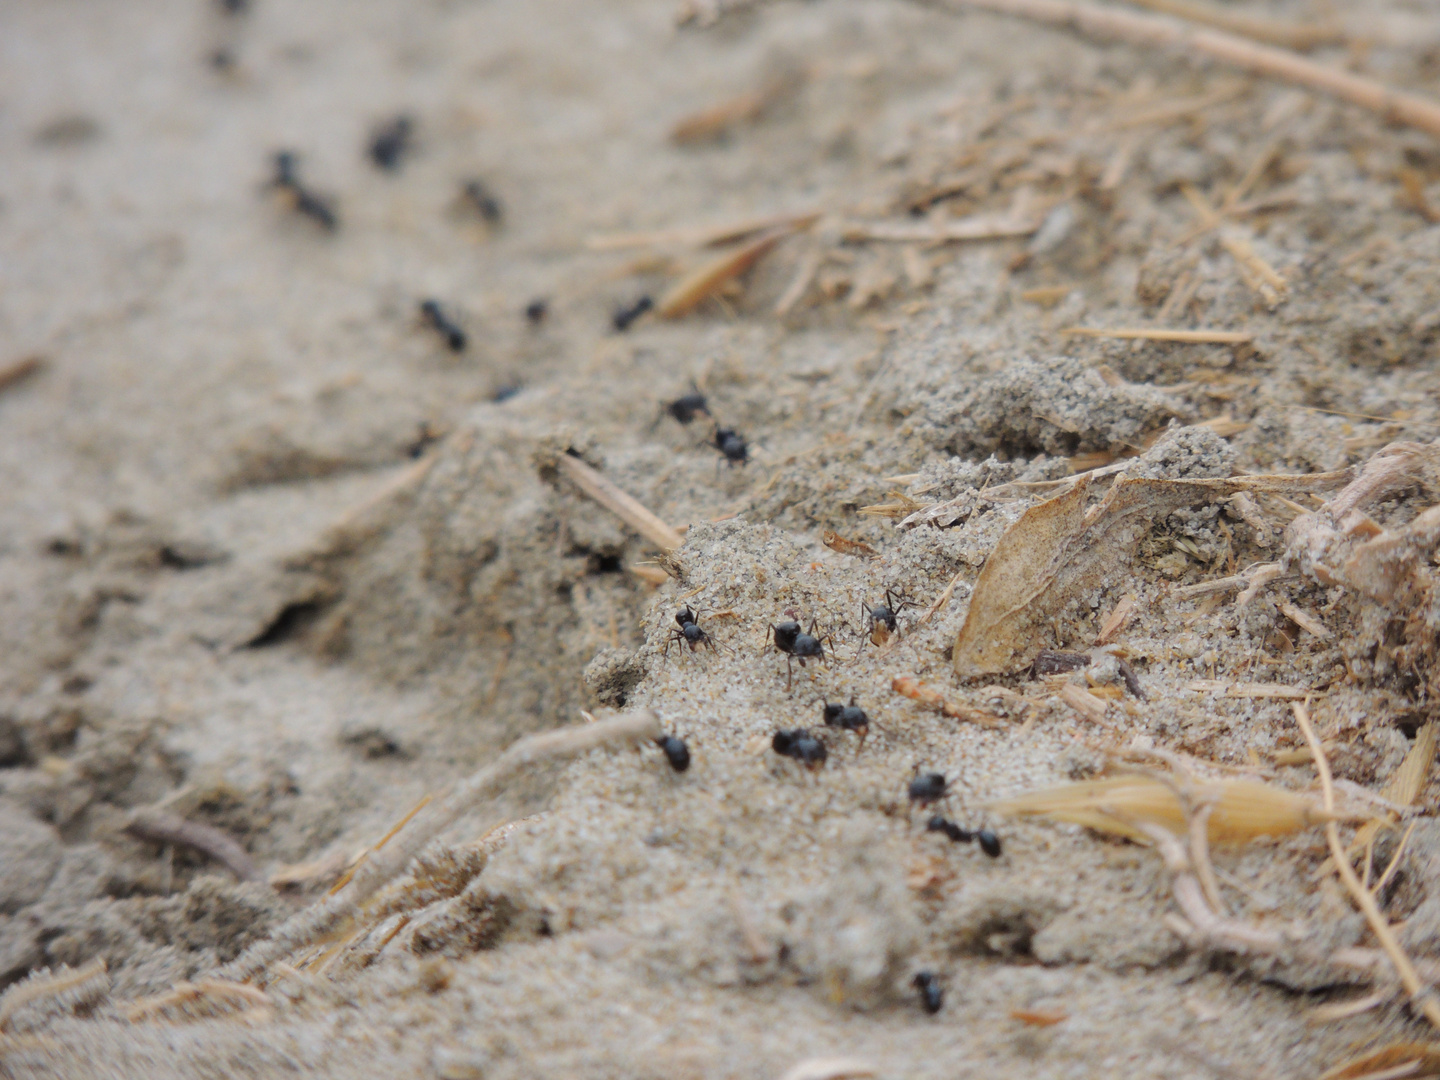 Autoroute de fourmis